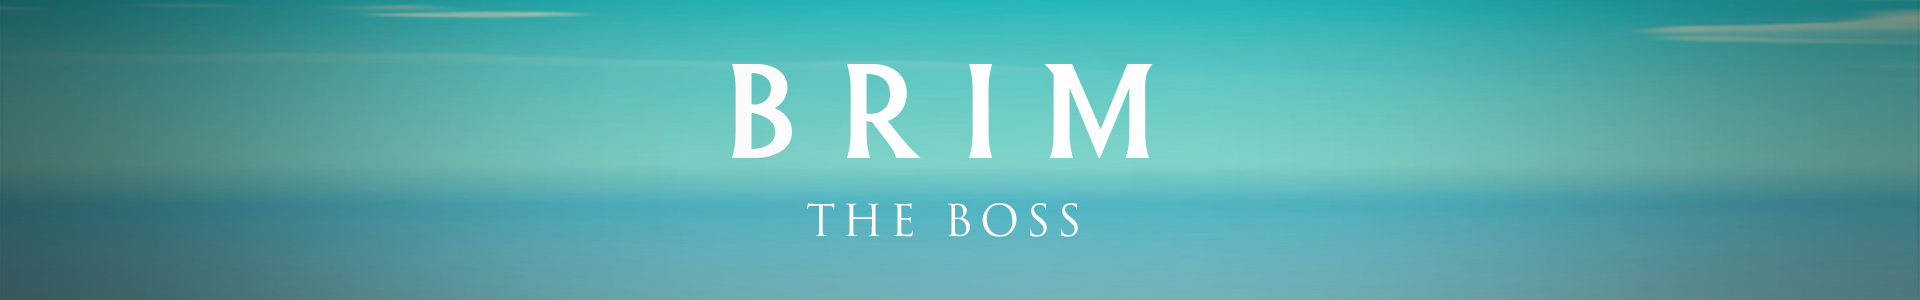 Brim: The Boss